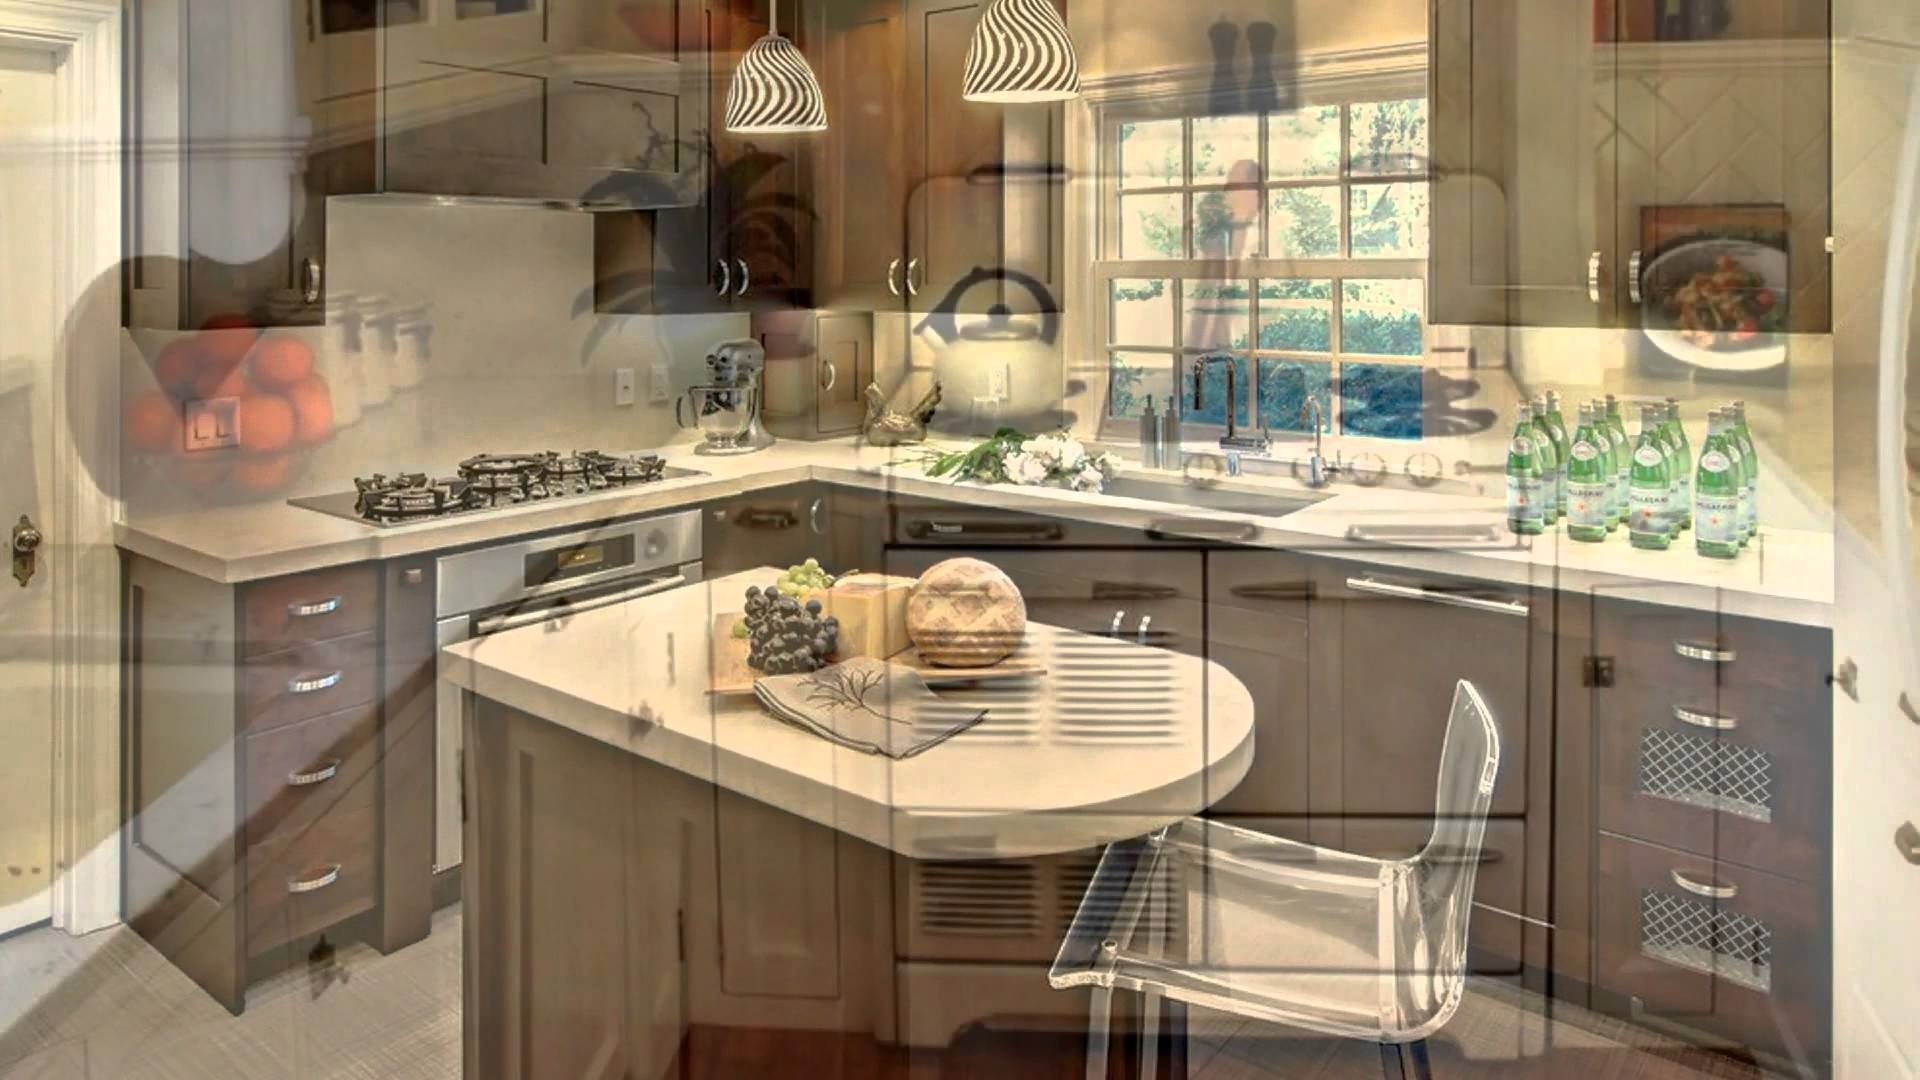 10 Fashionable Kitchen Design Ideas Photo Gallery small kitchen design ideas youtube 2022